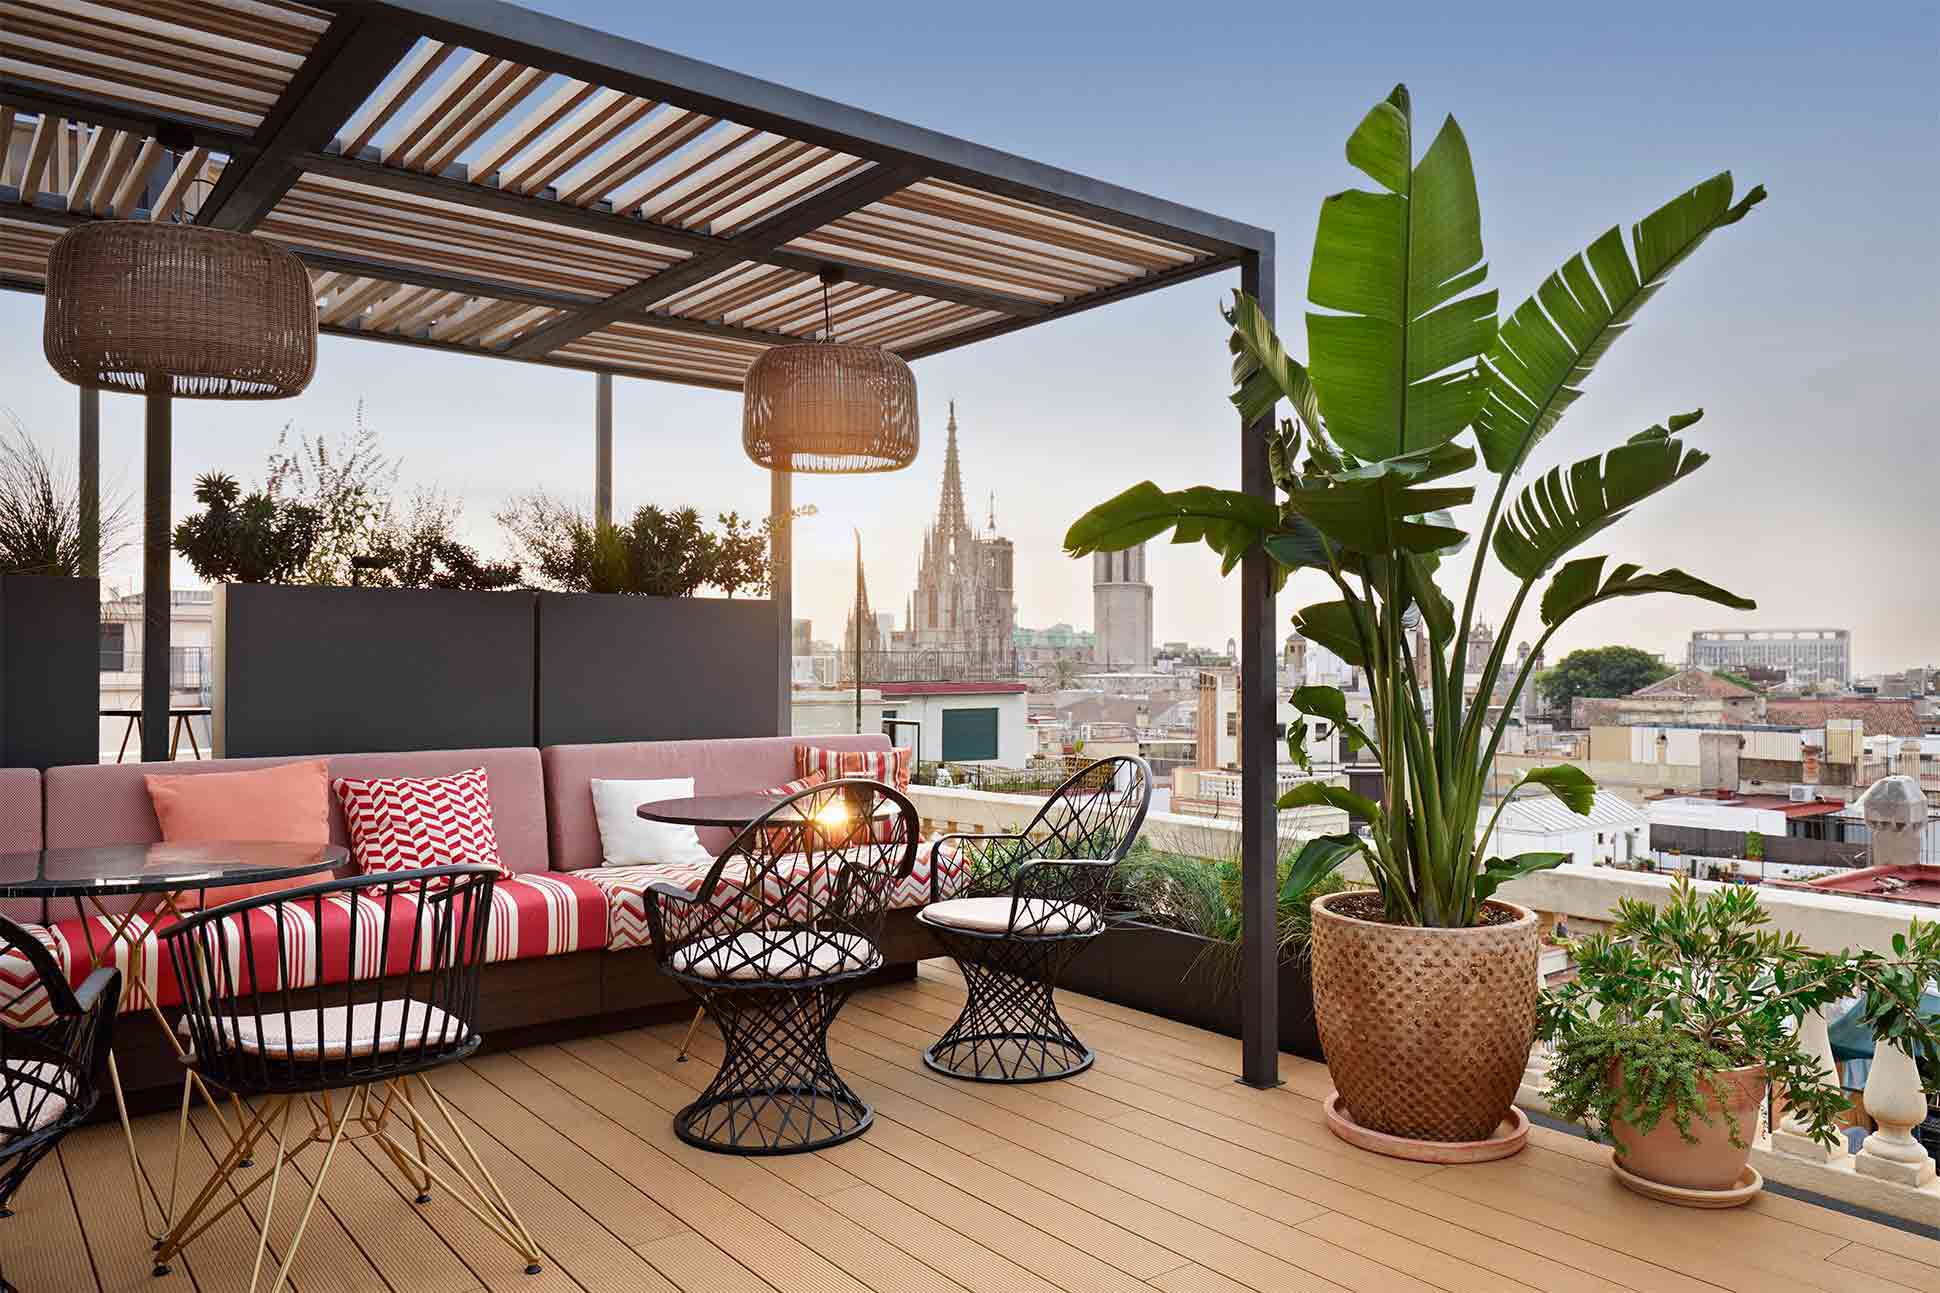 The rooftop terrace restaurant at the Kimpton Vividora Hotel, Barcelona, Spain